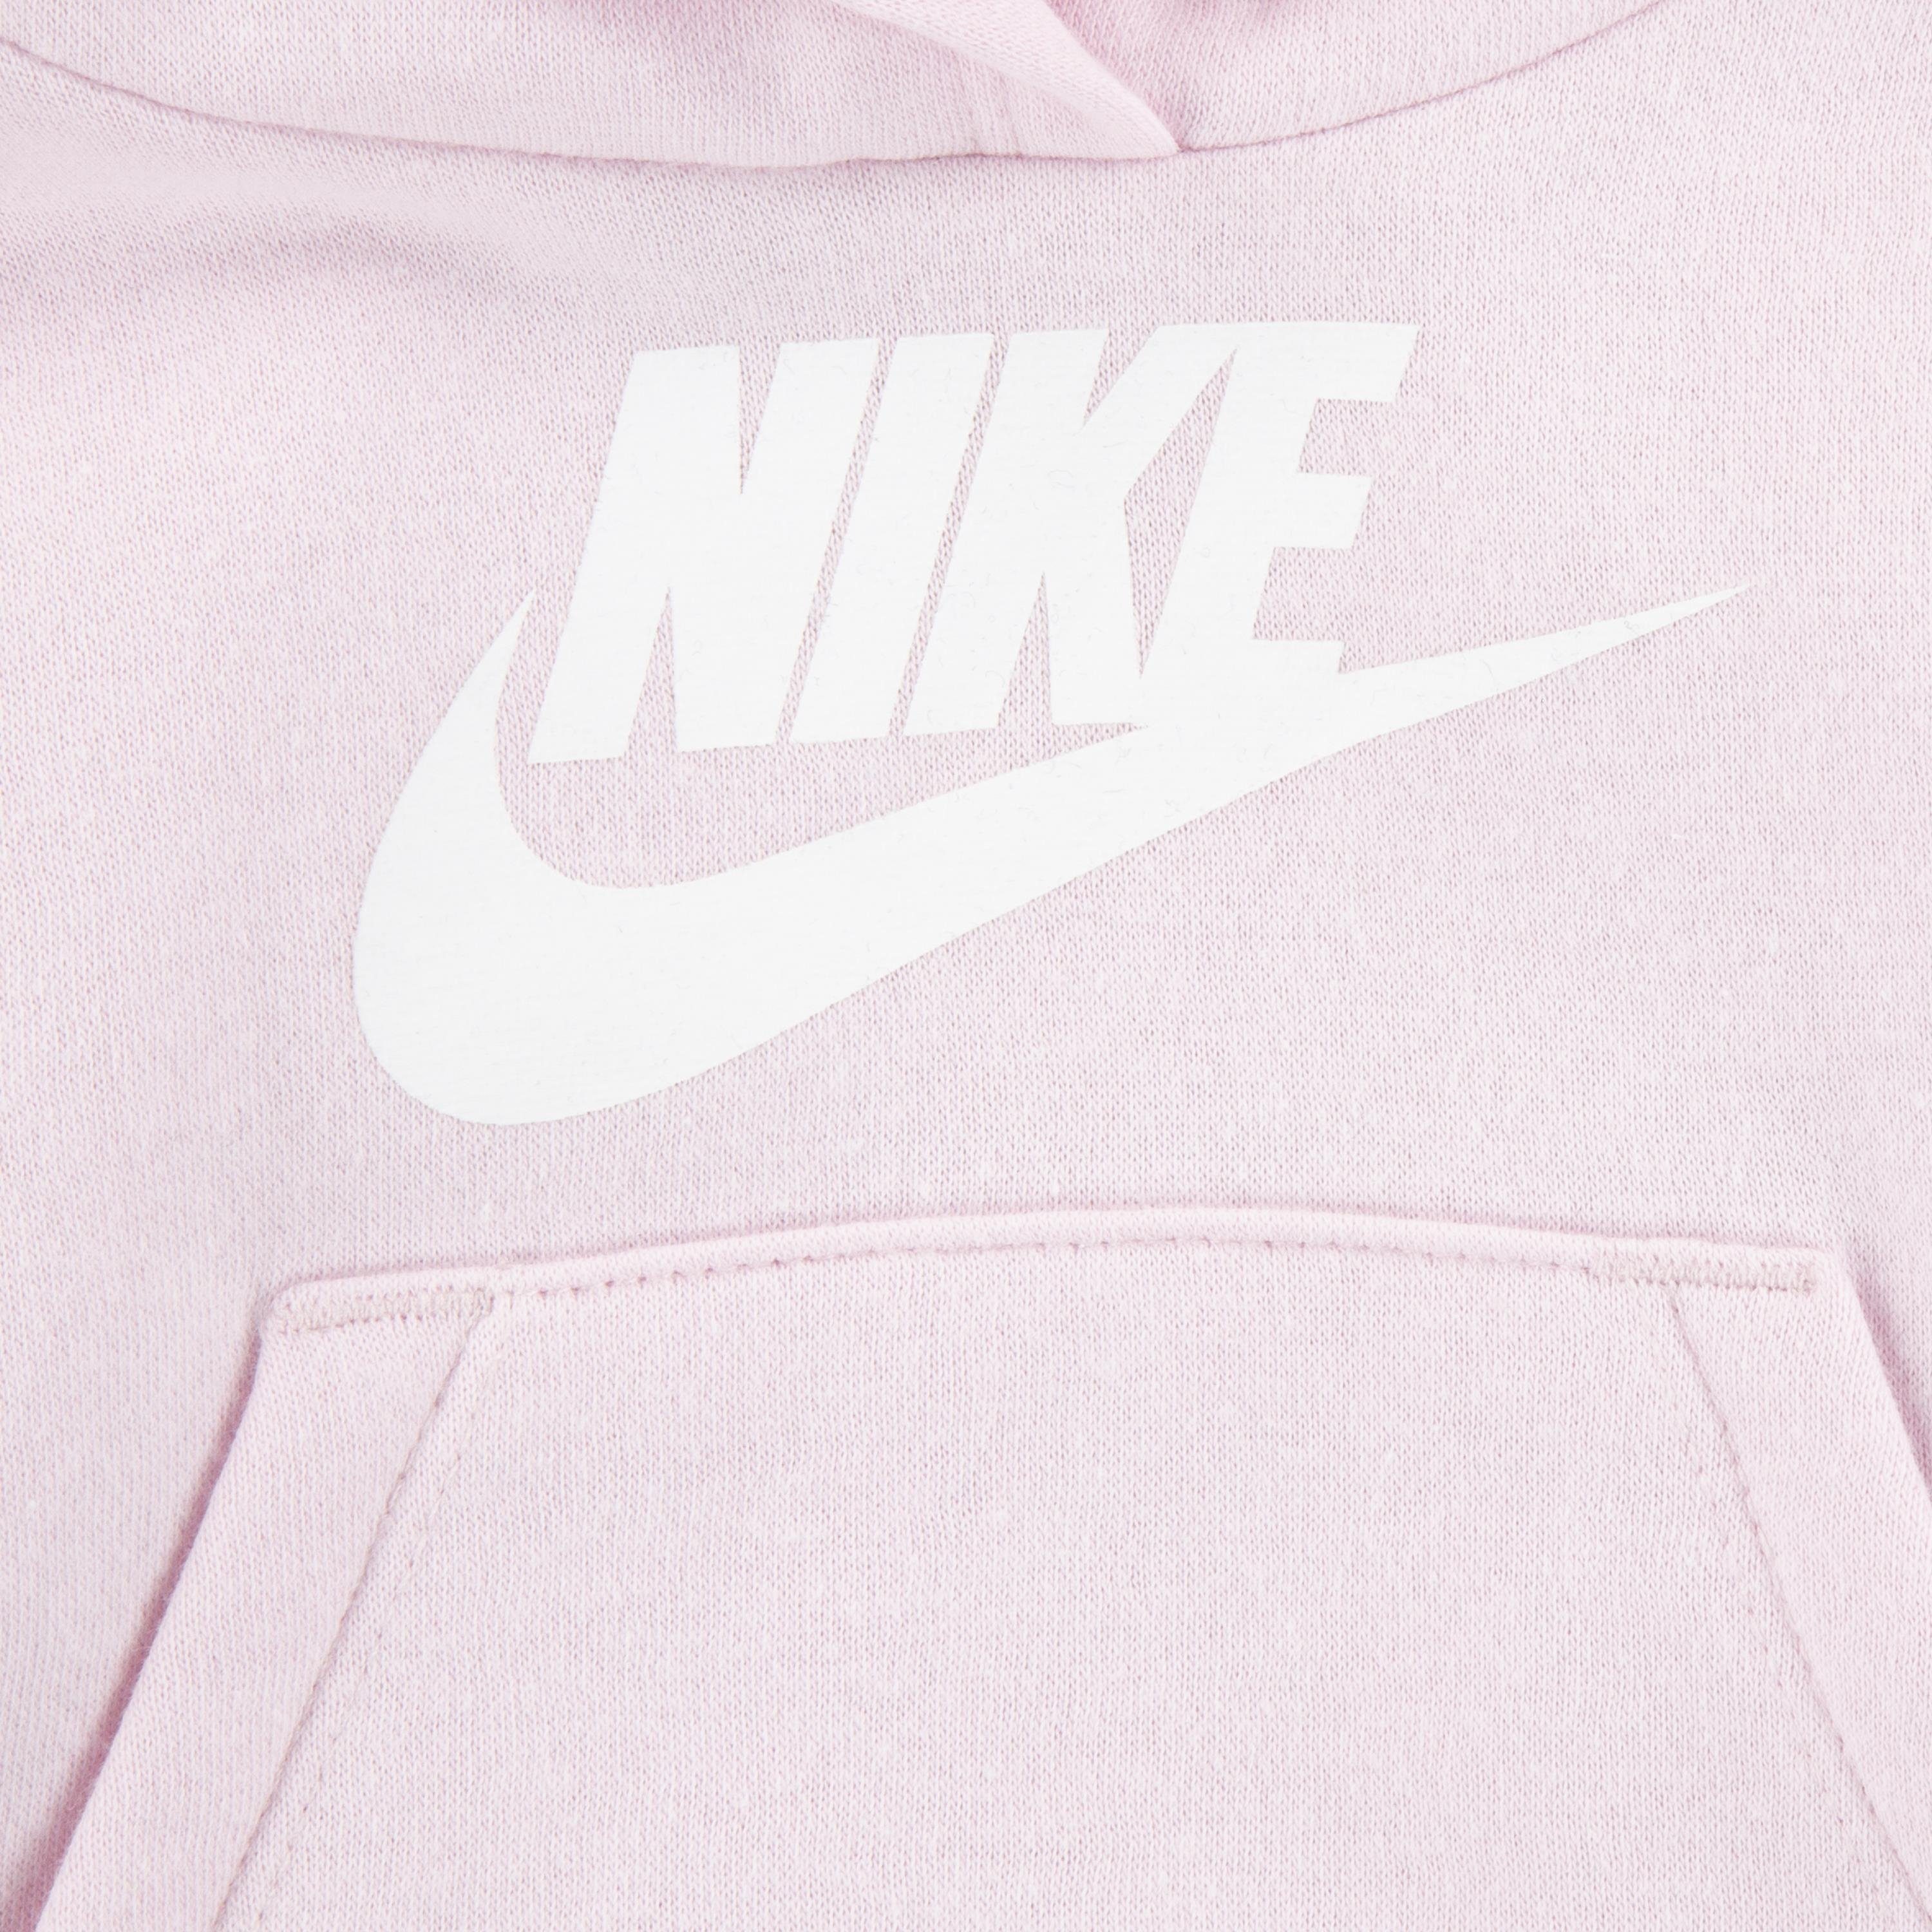 Nike Sportswear Jogginganzug CLUB rosa FLEECE SET